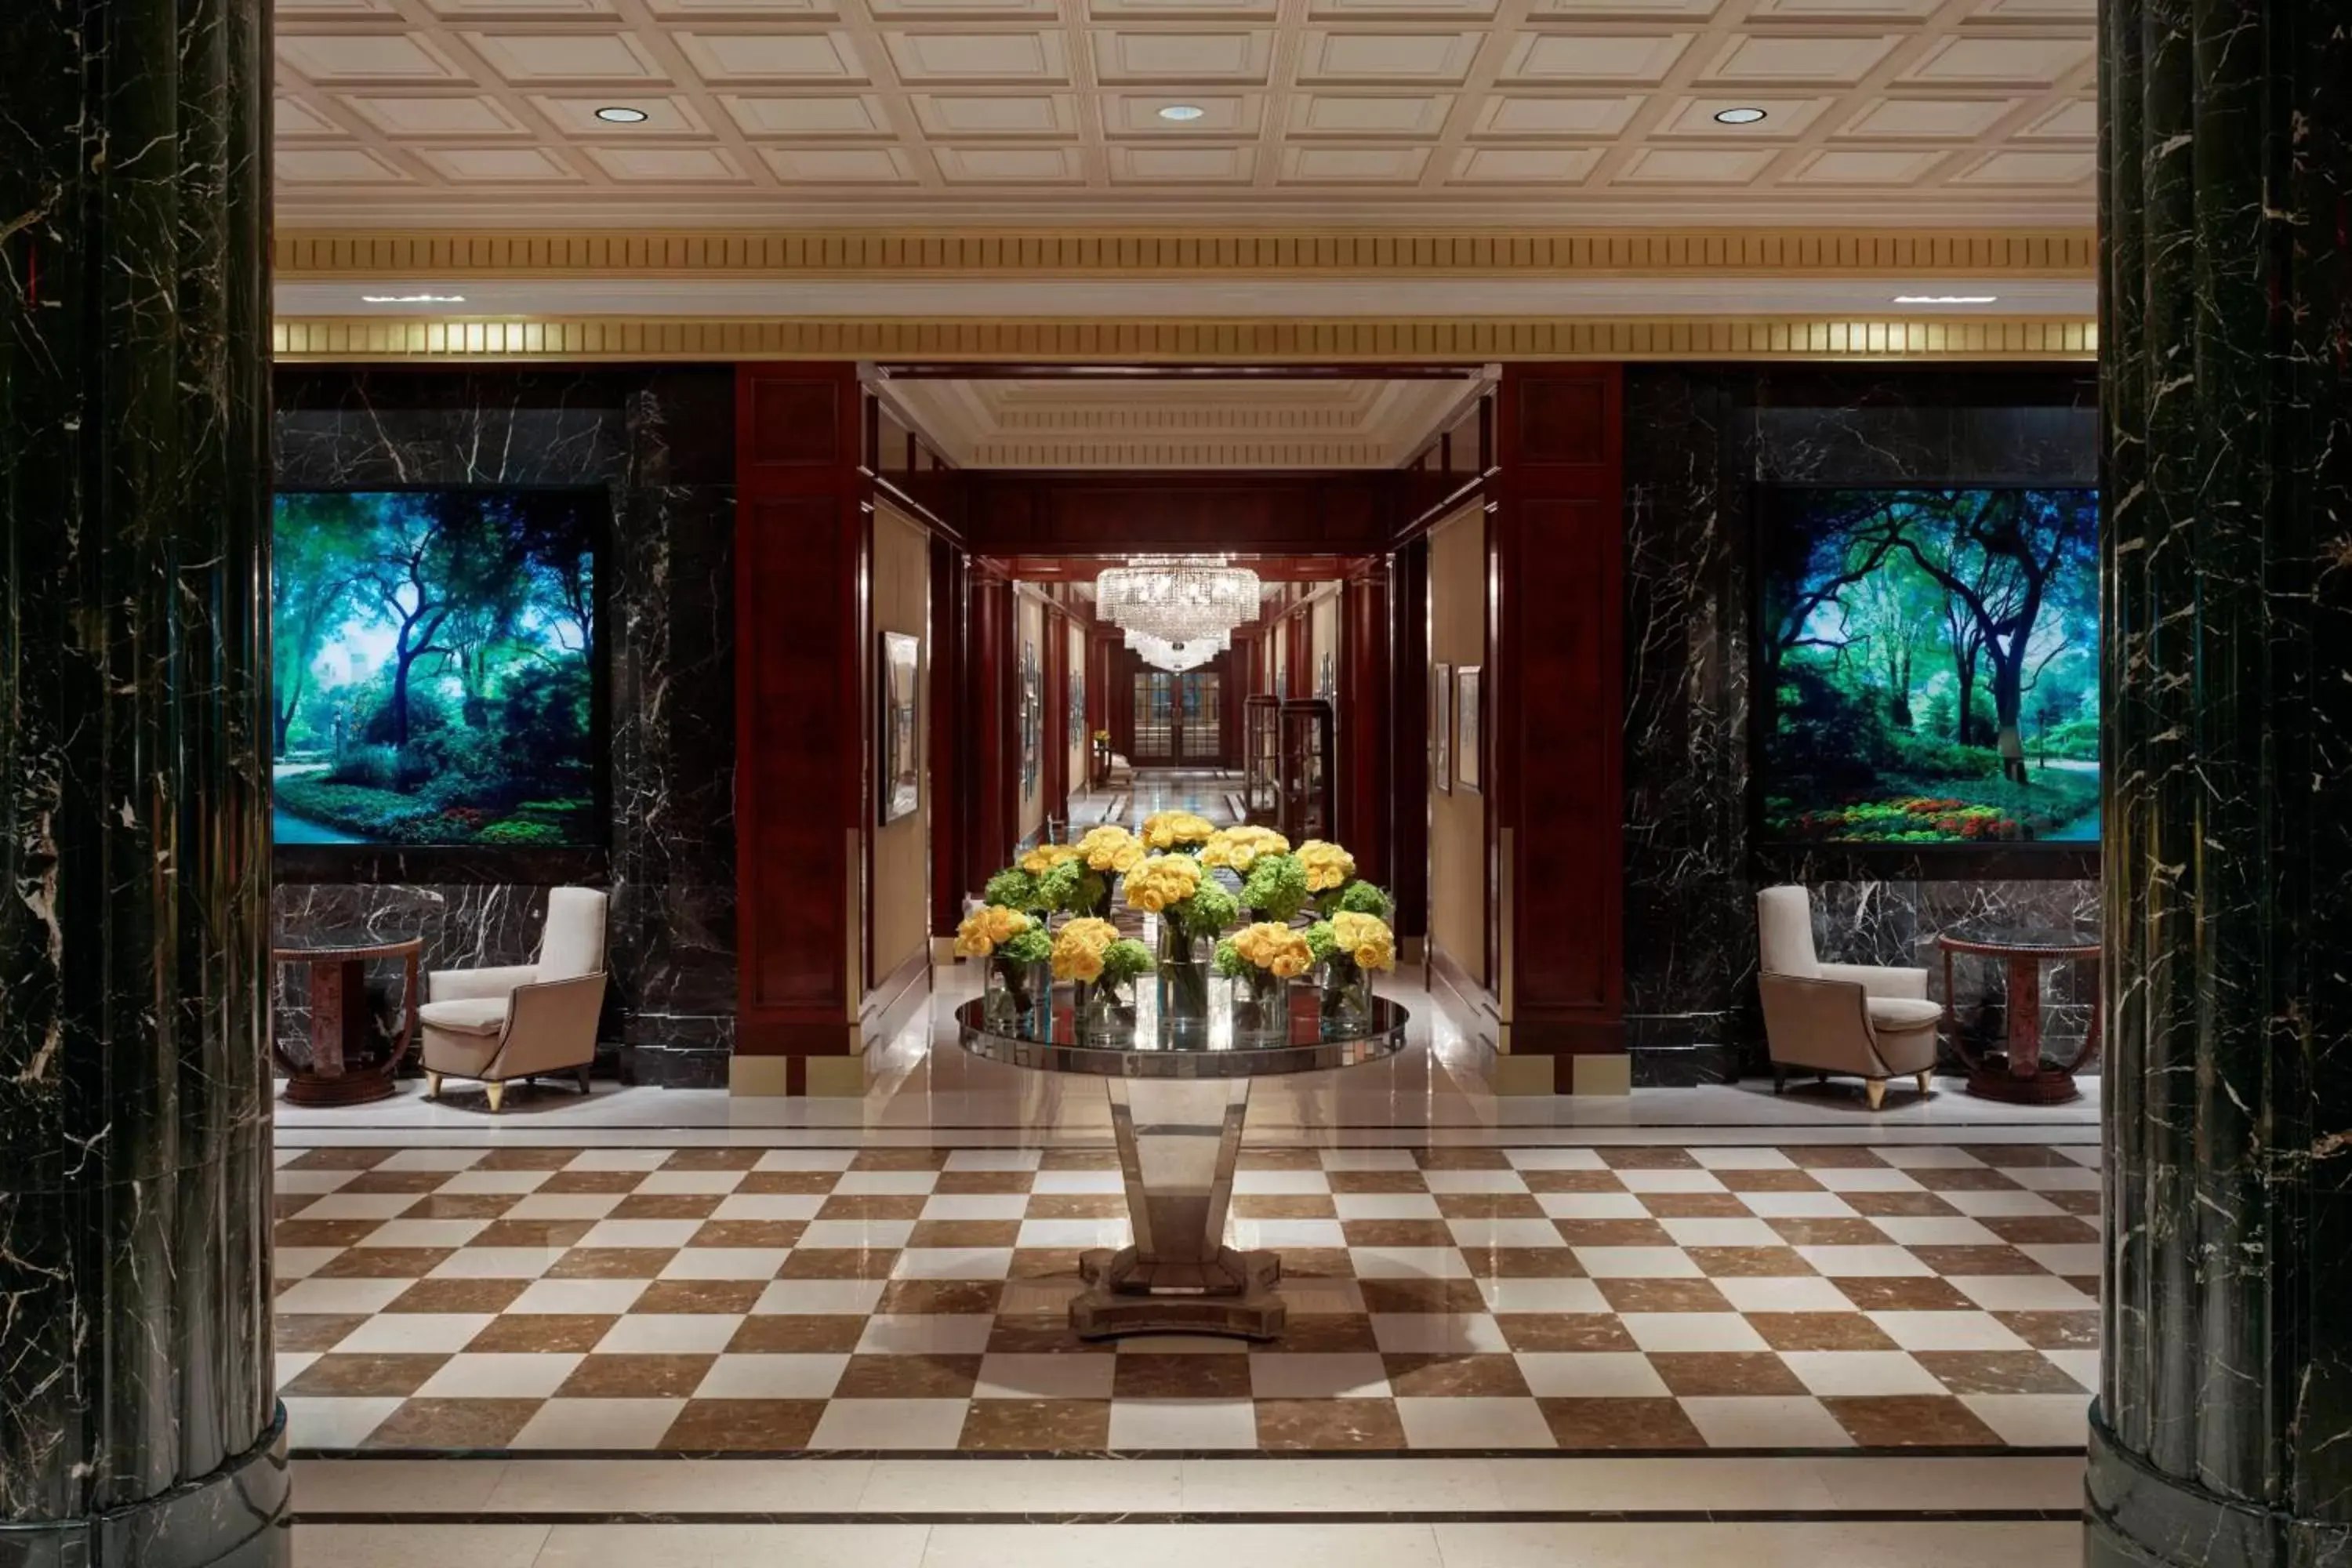 Lobby or reception in JW Marriott Essex House New York